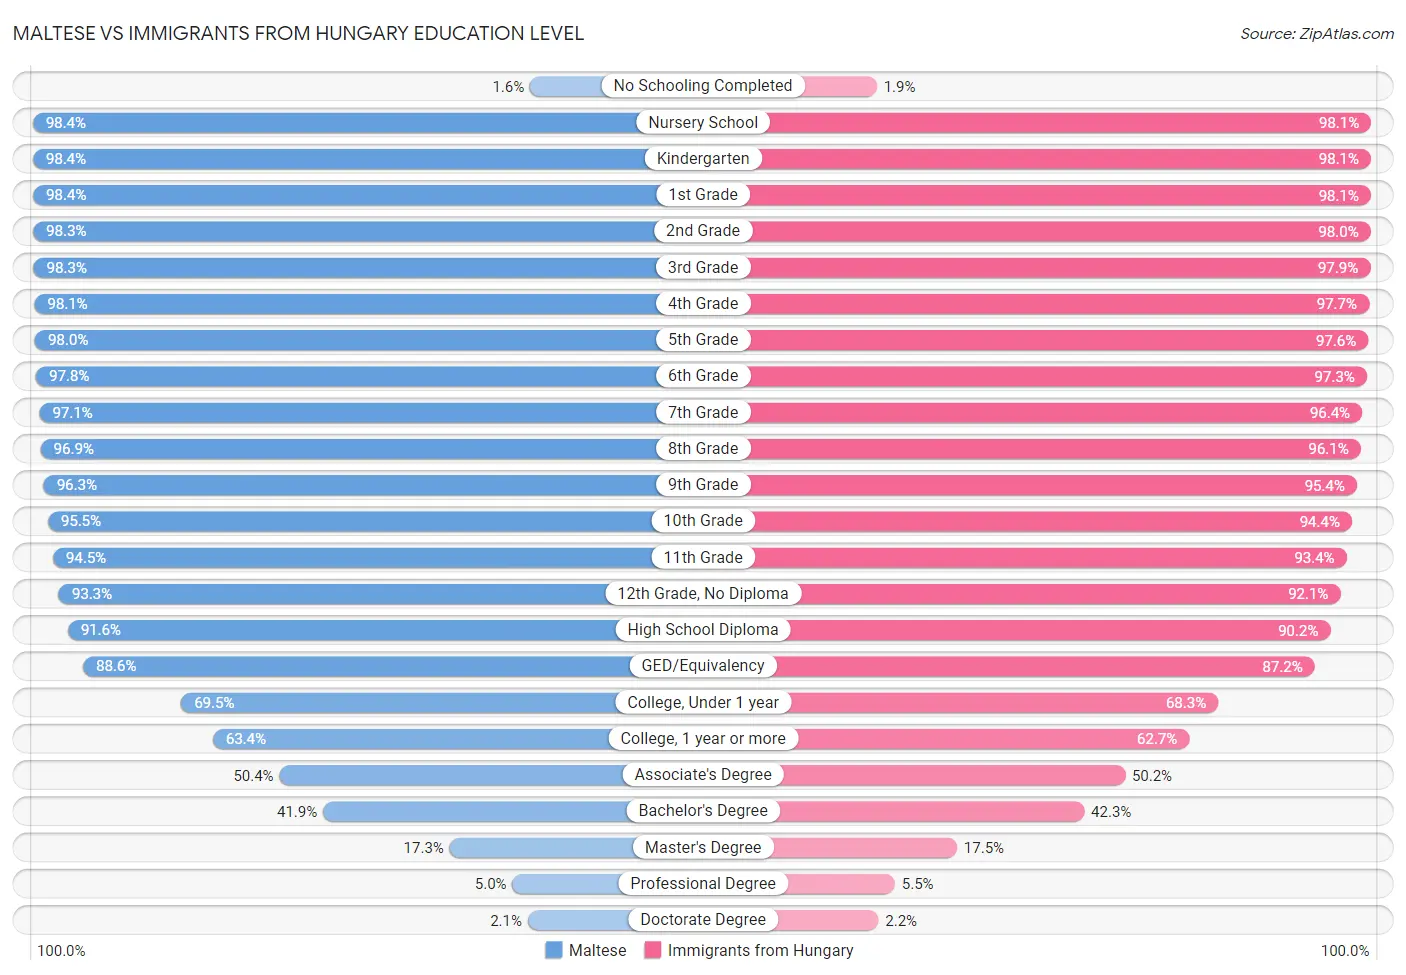 Maltese vs Immigrants from Hungary Education Level